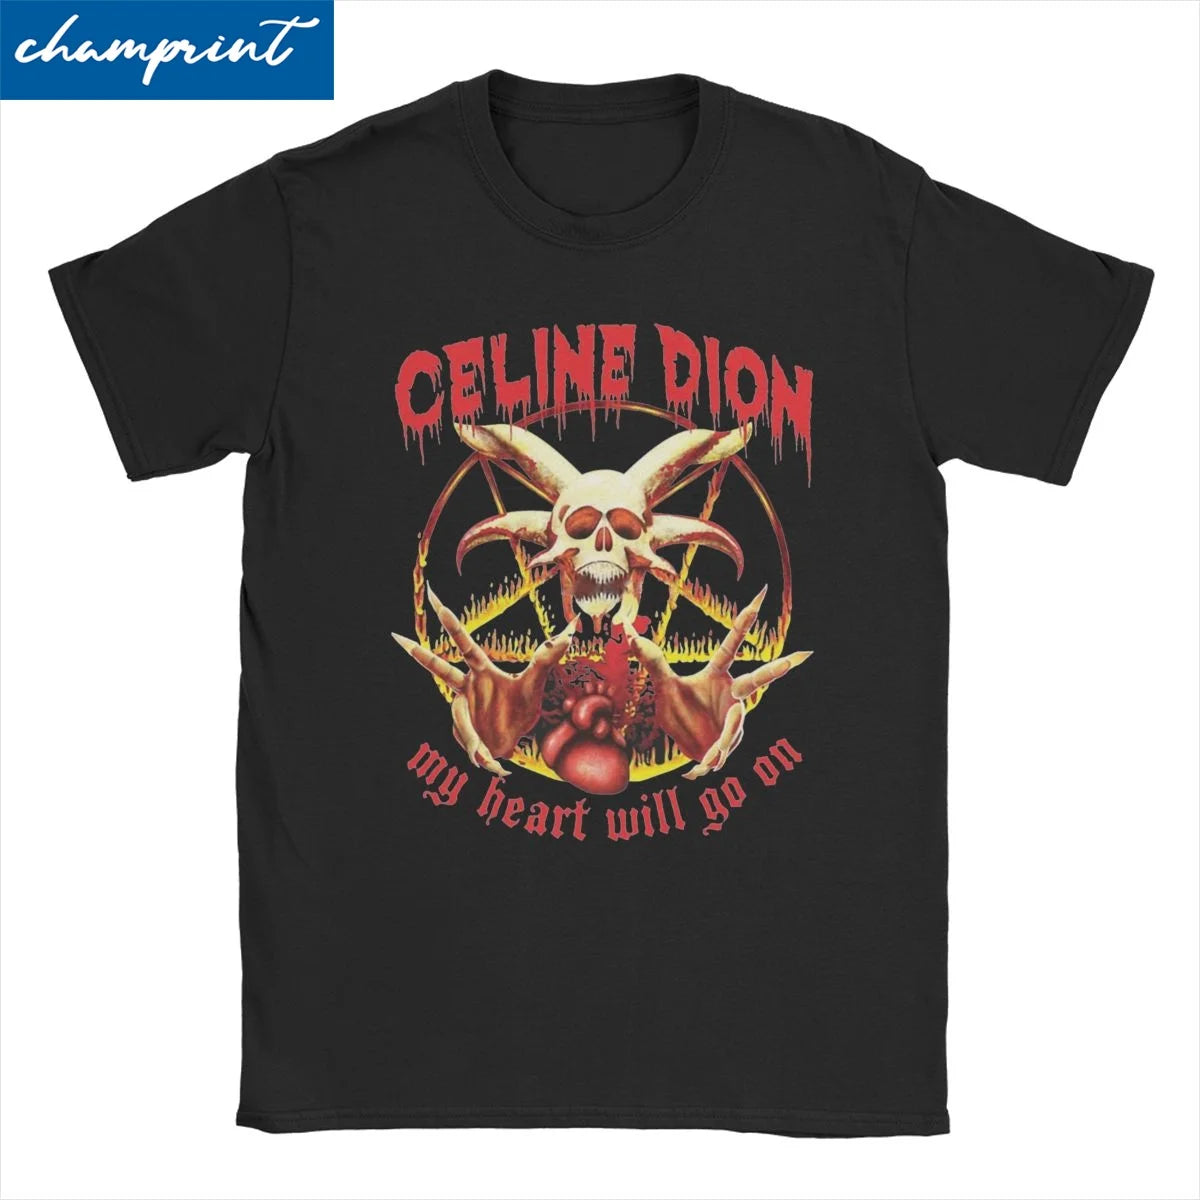 Celine Dion My Heart Will Go On Metal T Shirt Men Women's Cotton T-Shirts Crew Neck Titanic Rock Tees Short Sleeve Tops Big Size - Lizard Vigilante